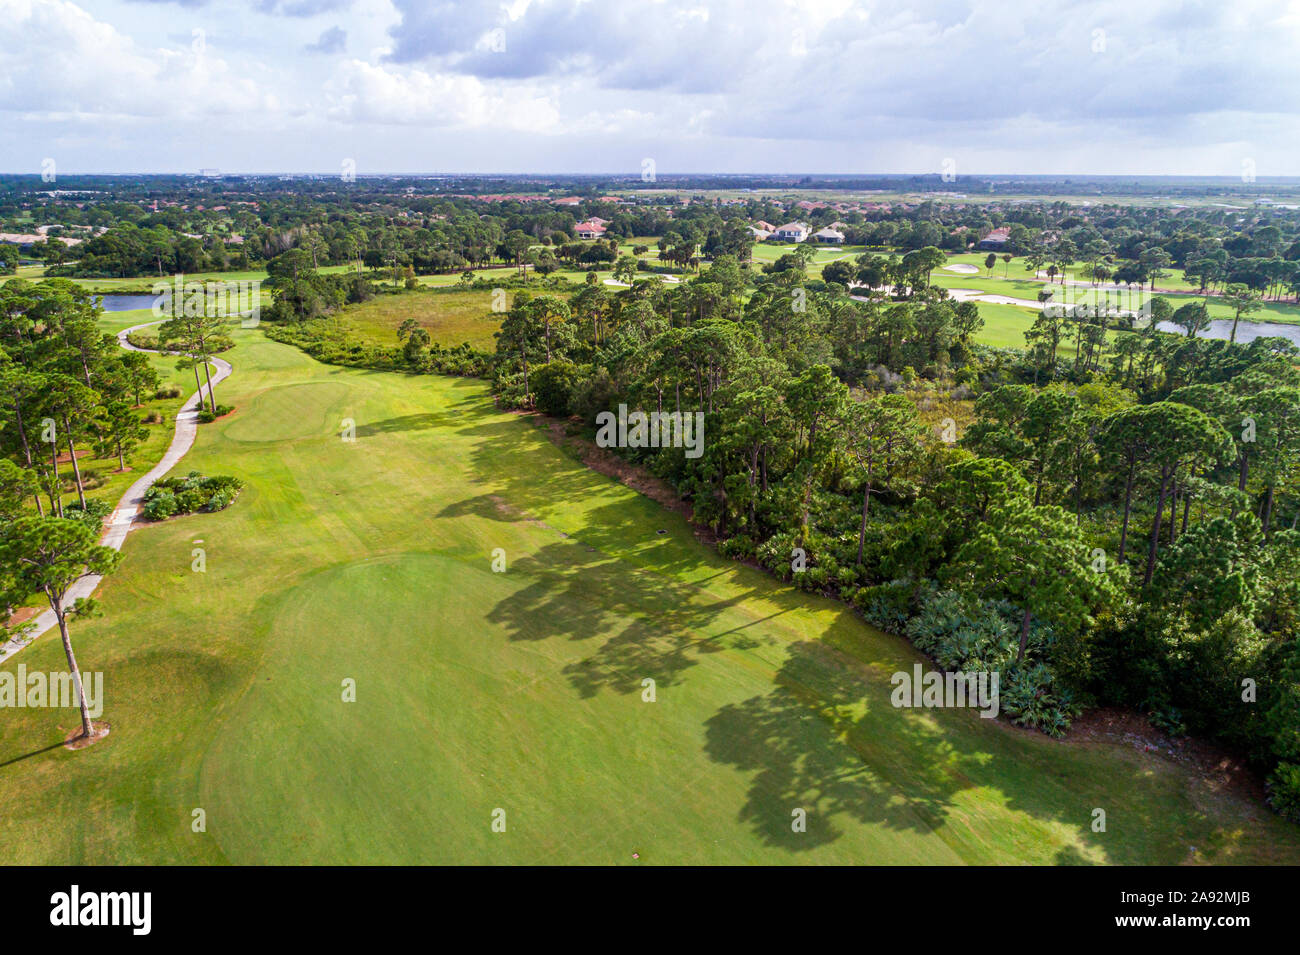 Florida, Port PT Saint St. Lucie, PGA Golf Club im PGA Village, Golfplatz Fairway Luftbild, FL190916d02 Stockfoto